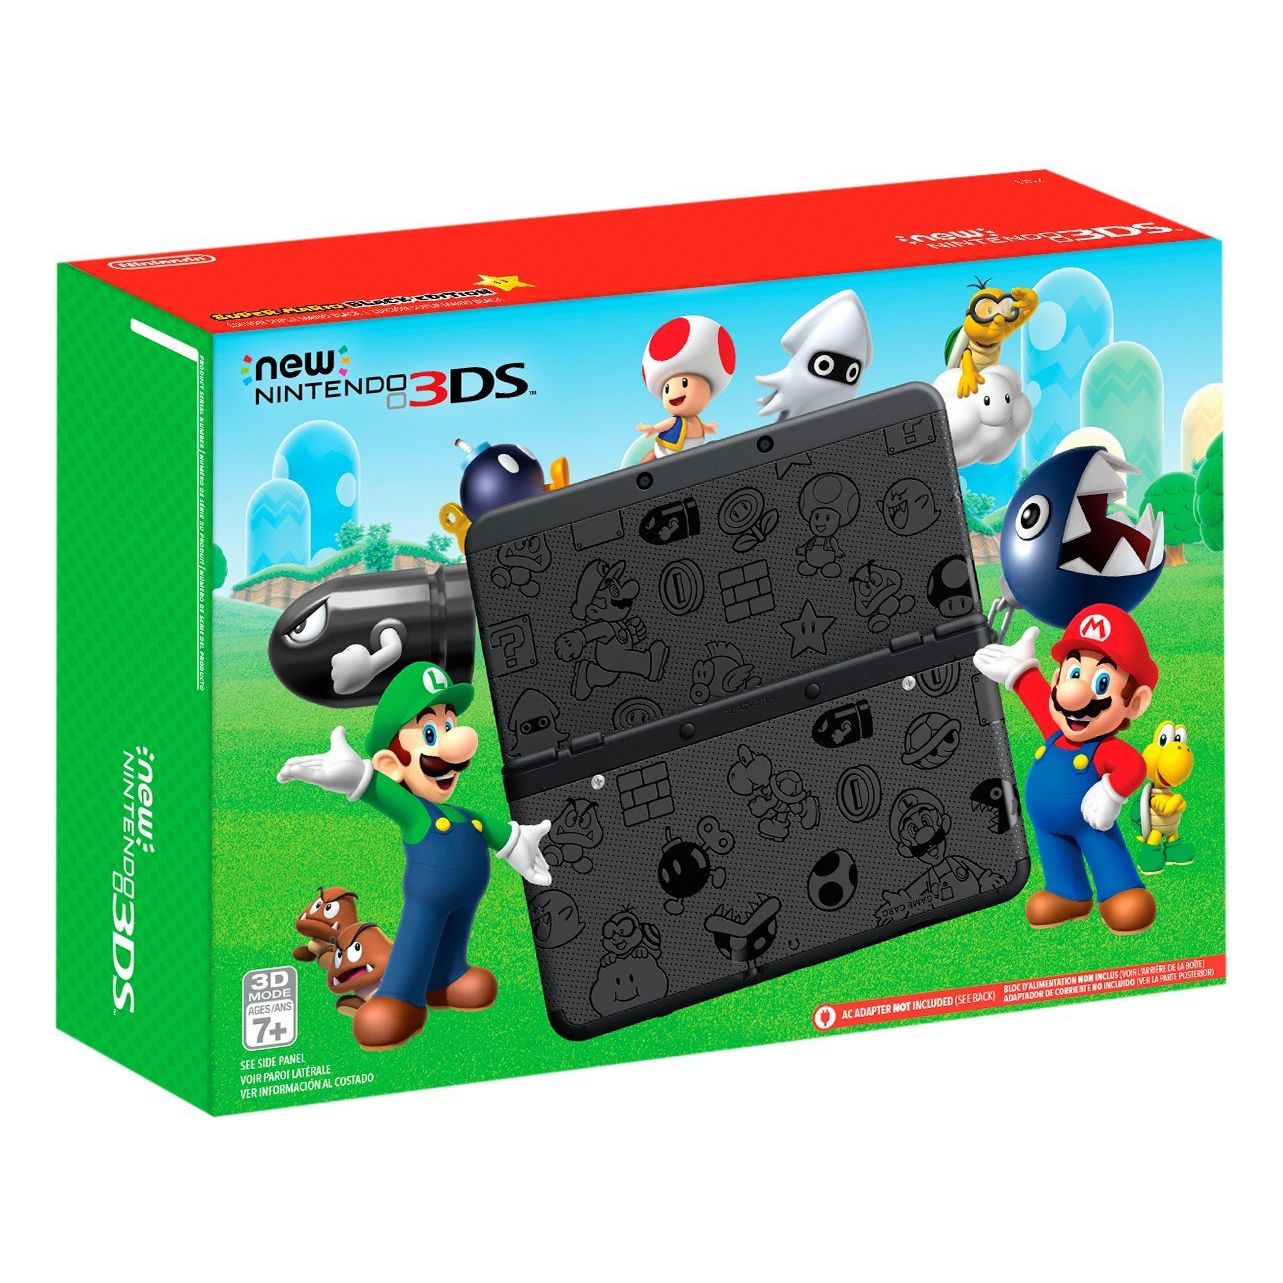 NEW NINTENDO 3DS - SUPER MARIO BLACK EDITION (used)